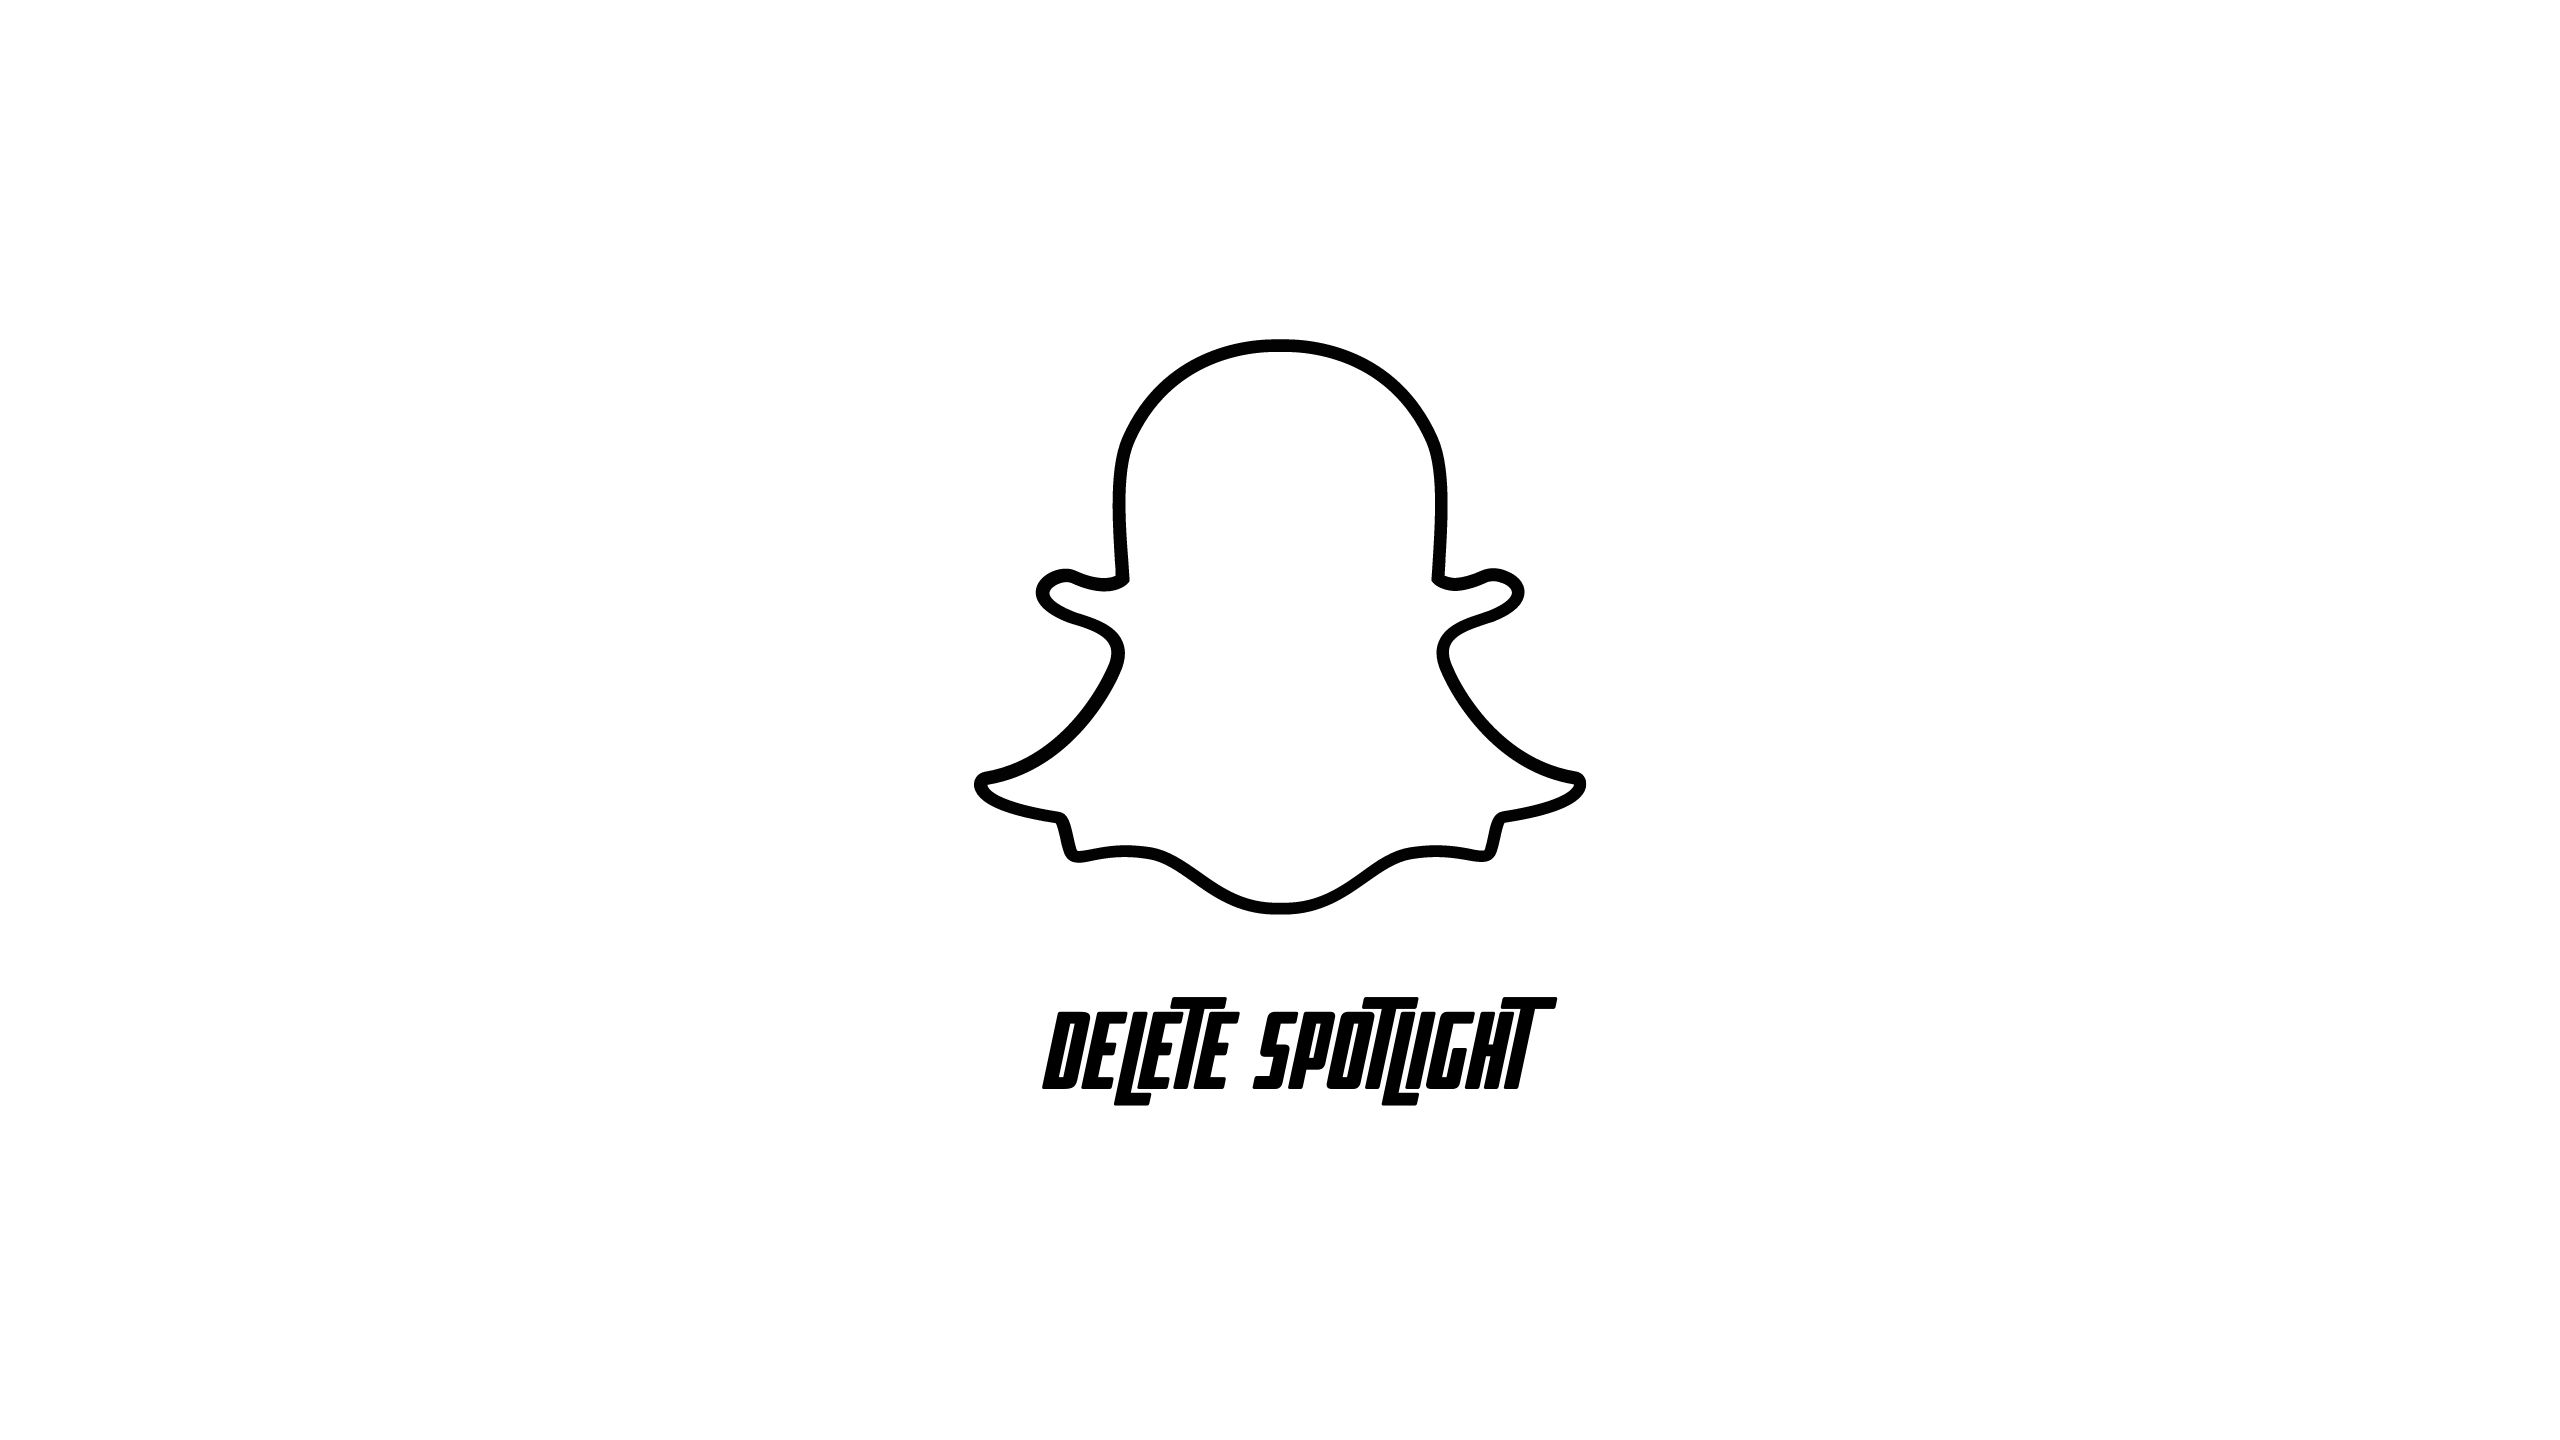 How to delete Spotlight on Snapchat